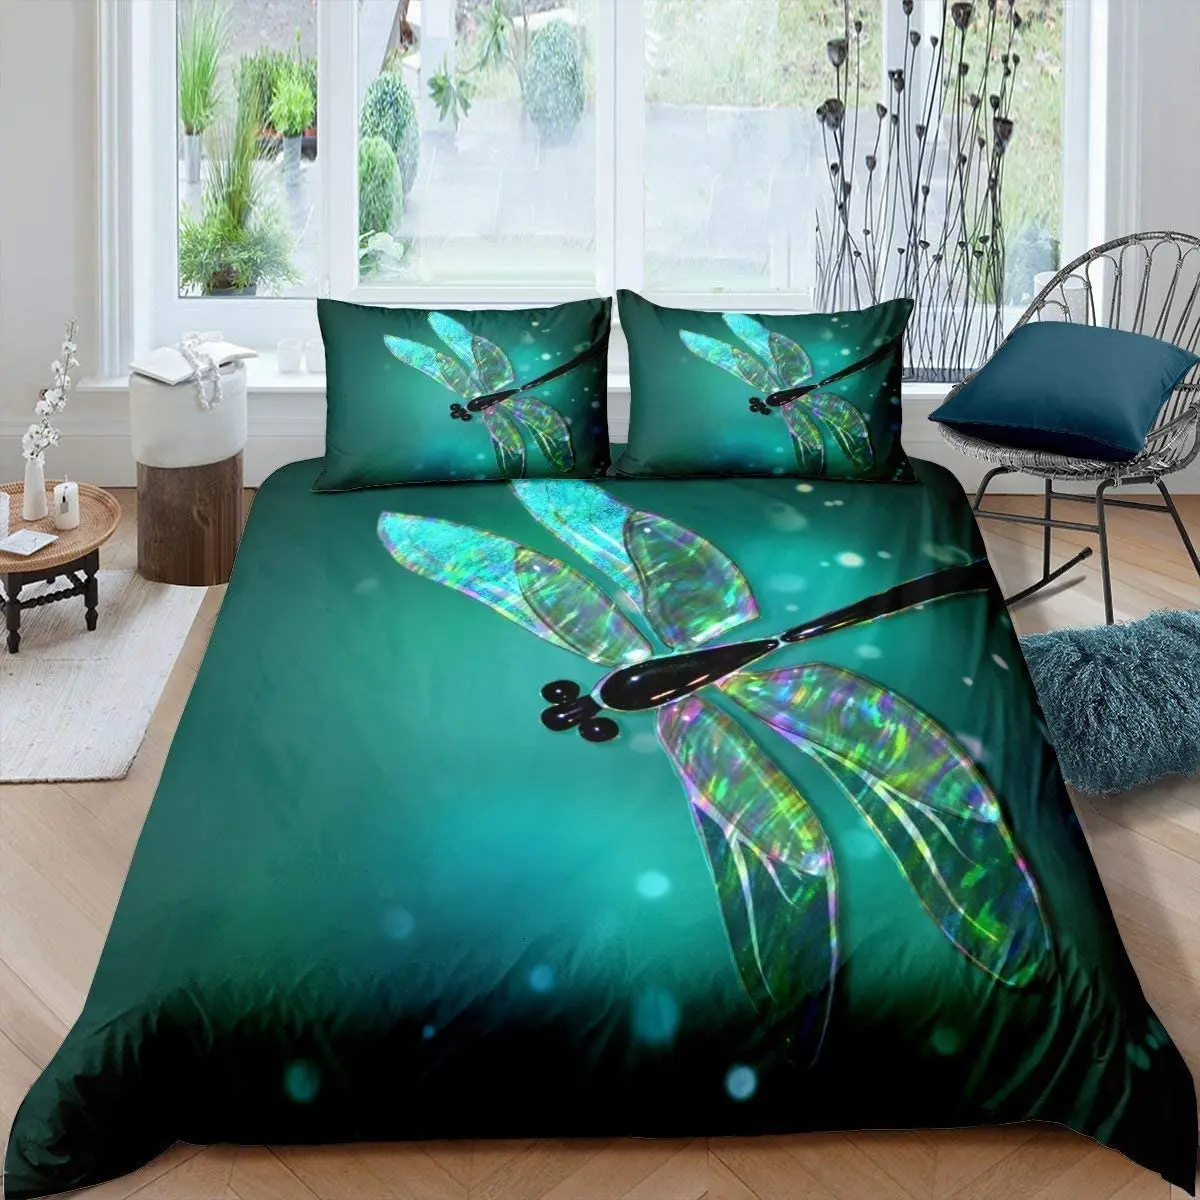 

Erosebridal Dragonfly Duvet Cover Queen Size Bedding Set for Kids Teens Adult, Colorful Wing Comforter/Quilt Cover,